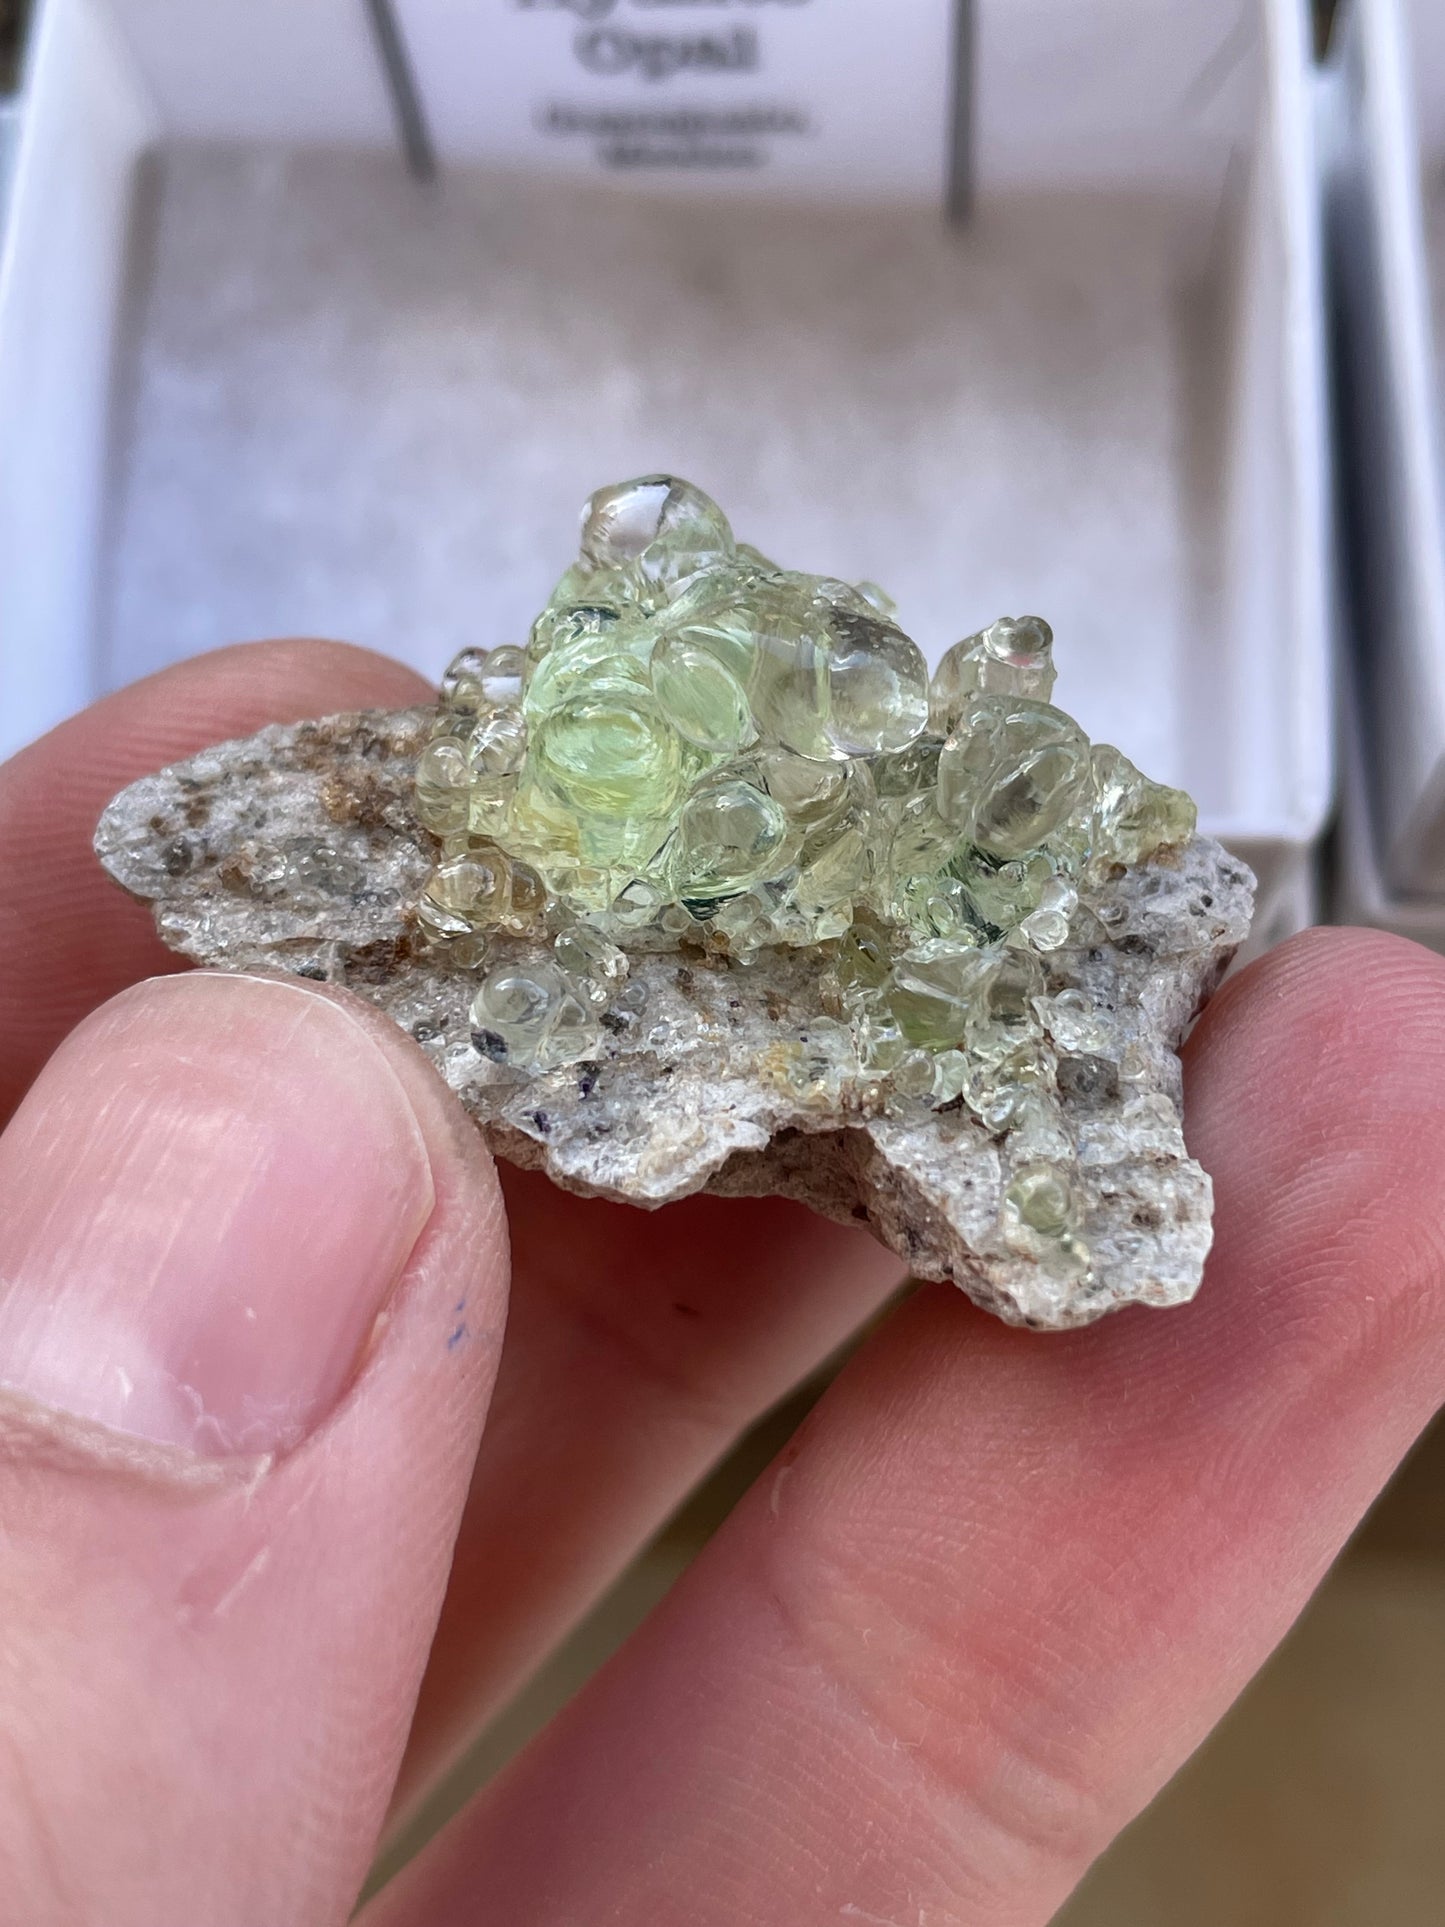 Hyalite Opal with Fluorite Inclusions, Guanajuato, Mexico